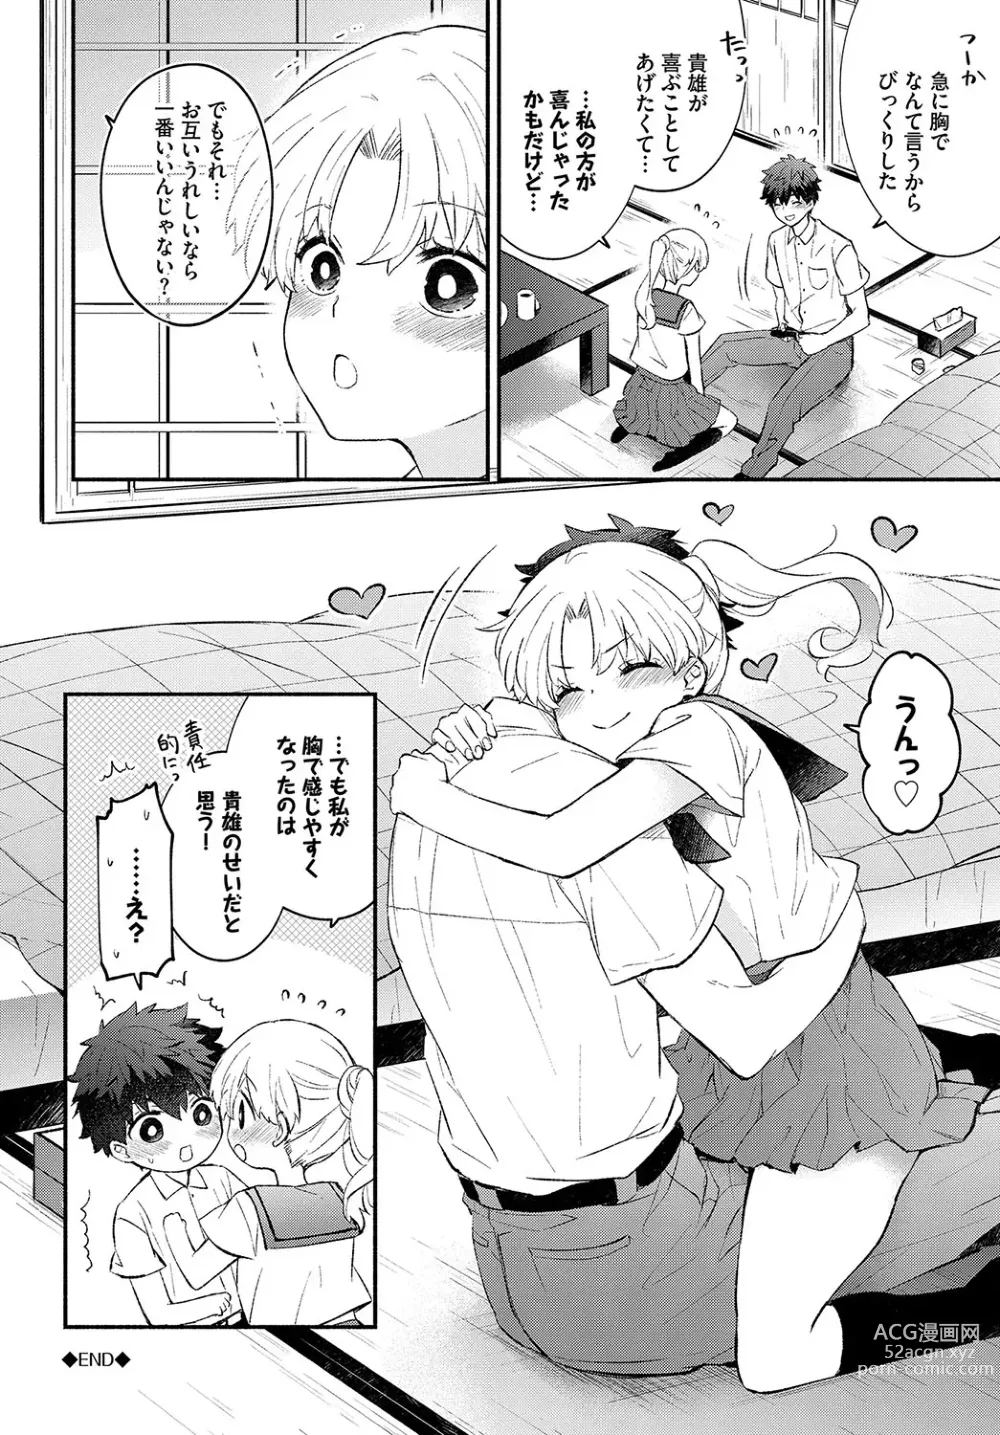 Page 203 of manga Junai Porno - Pure Love Porno